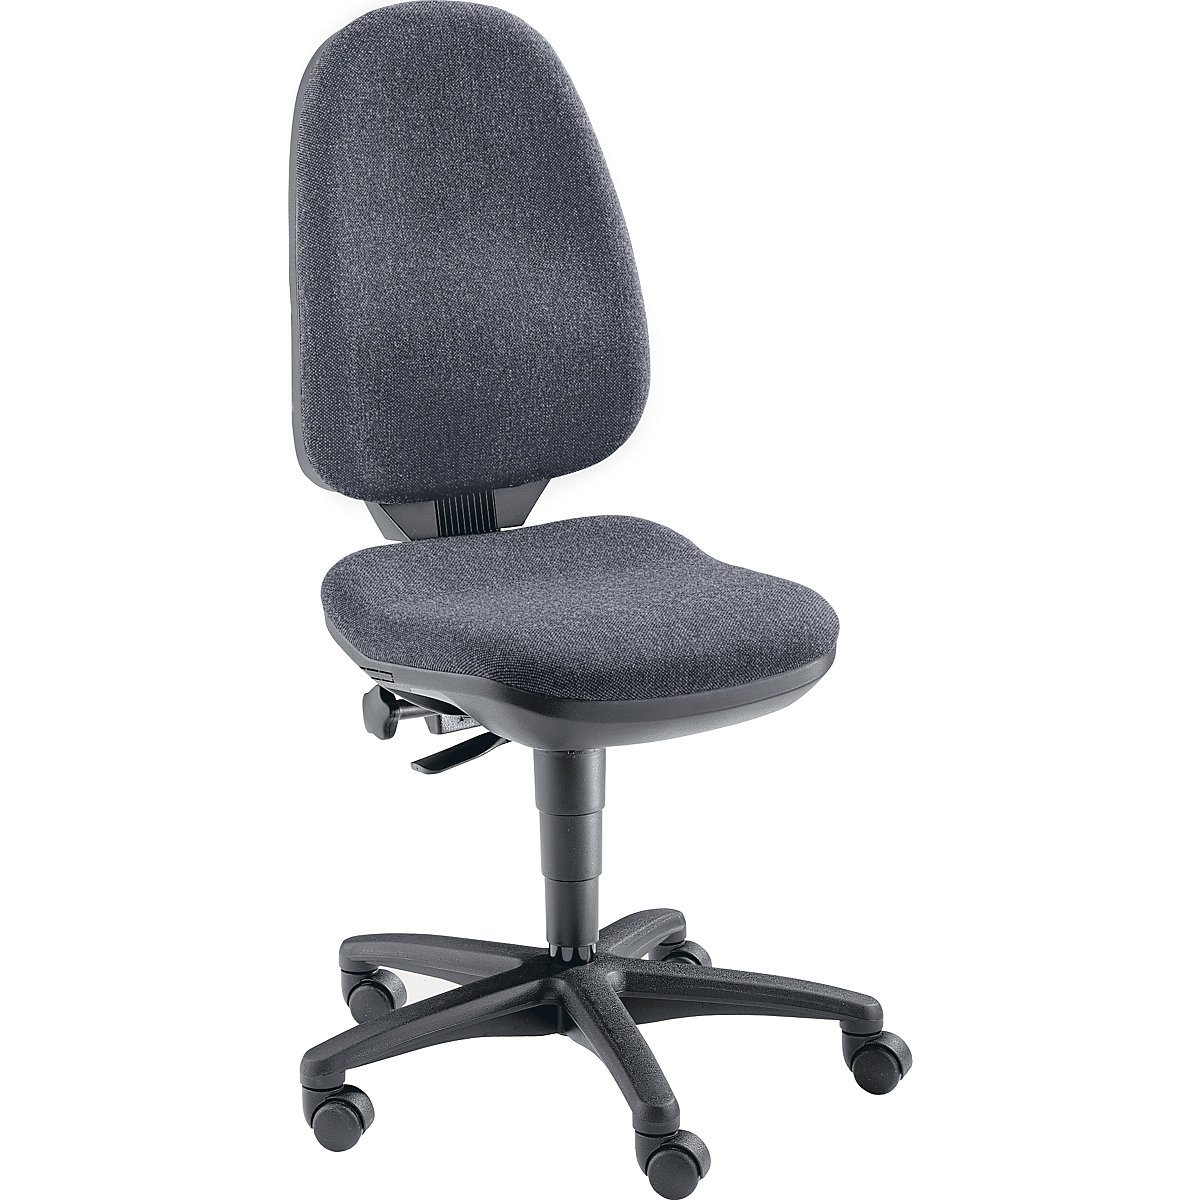 Chaise pivotante ergonomique – Topstar, sans accoudoirs, habillage anthracite-3